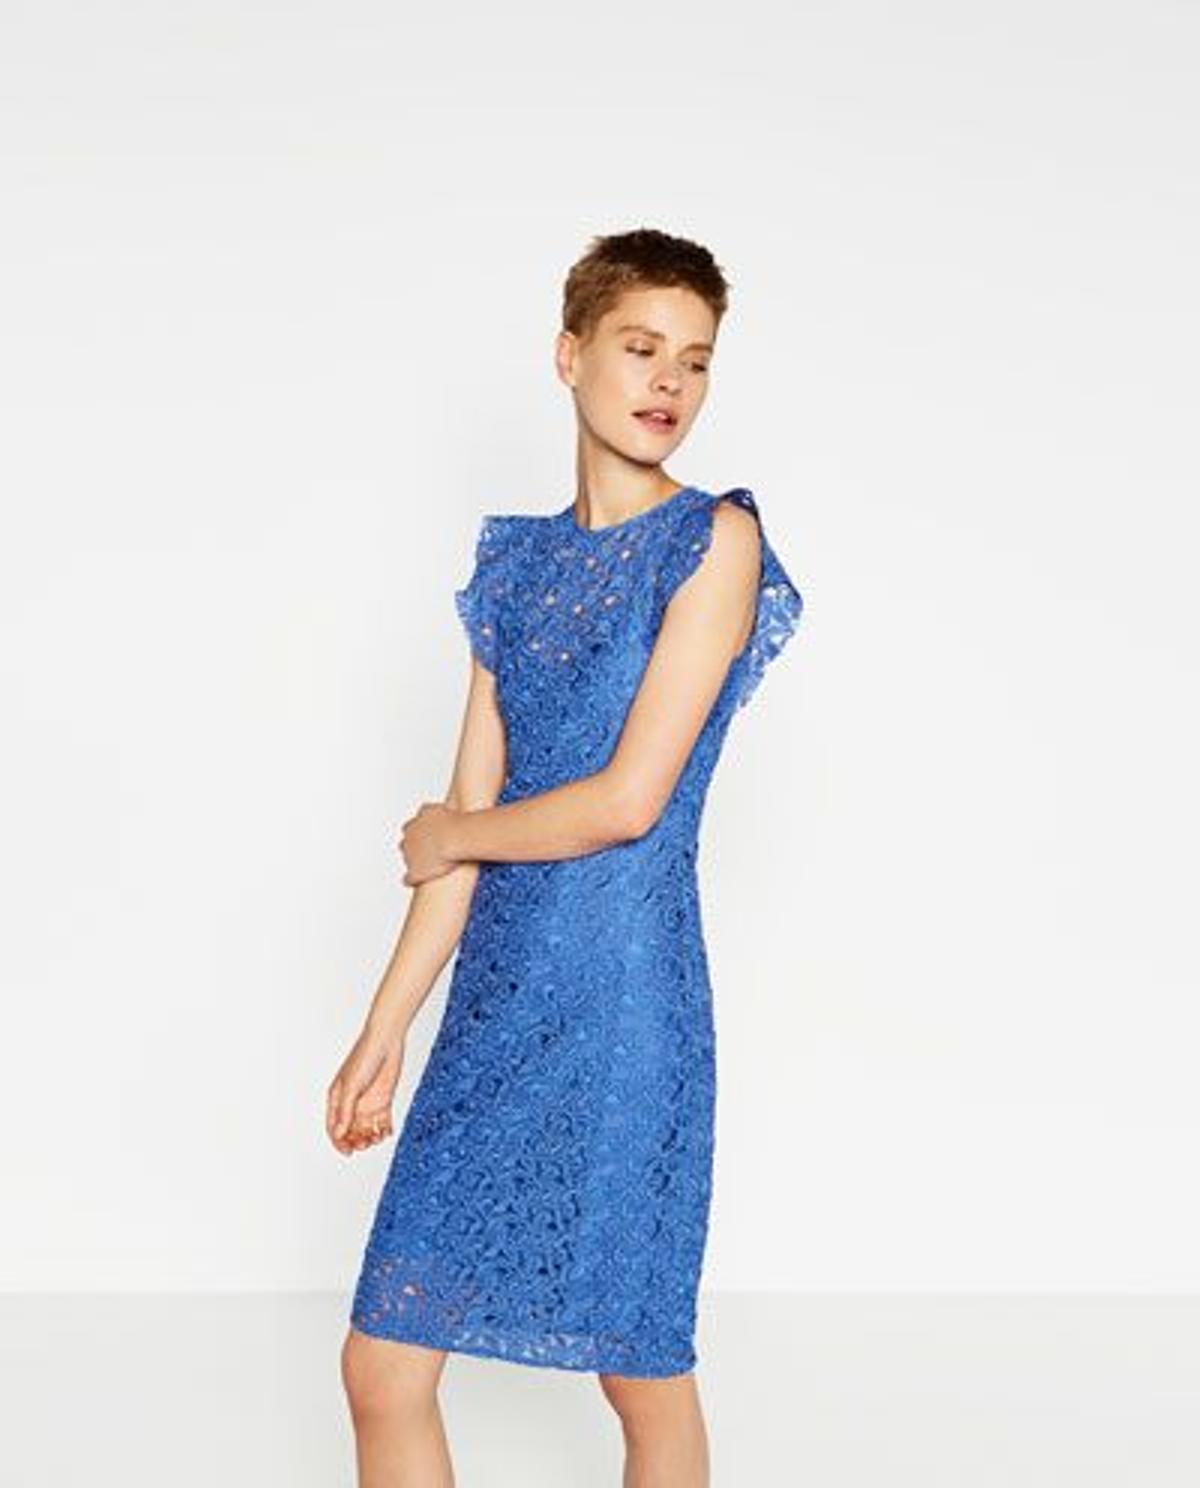 La perfecta invitada 'low cost', vestido giupur azul de Zara (49,95€)